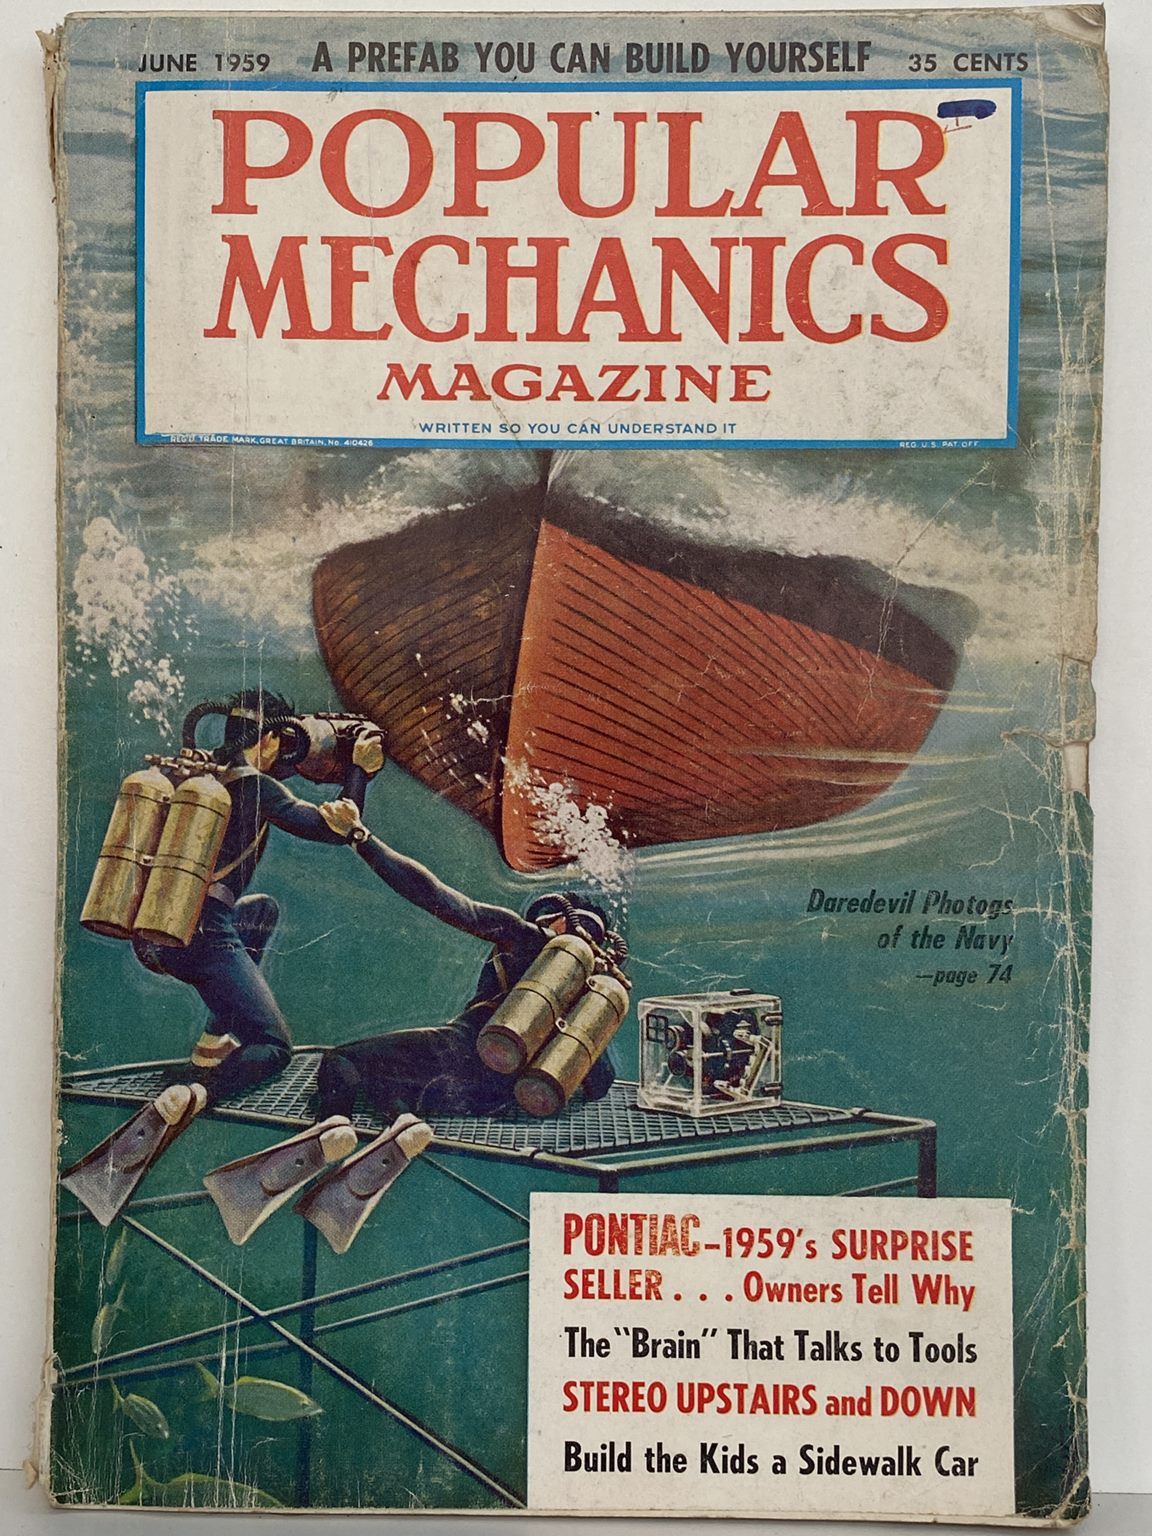 VINTAGE MAGAZINE: Popular Mechanics - Vol. 111, No. 6 - June 1959